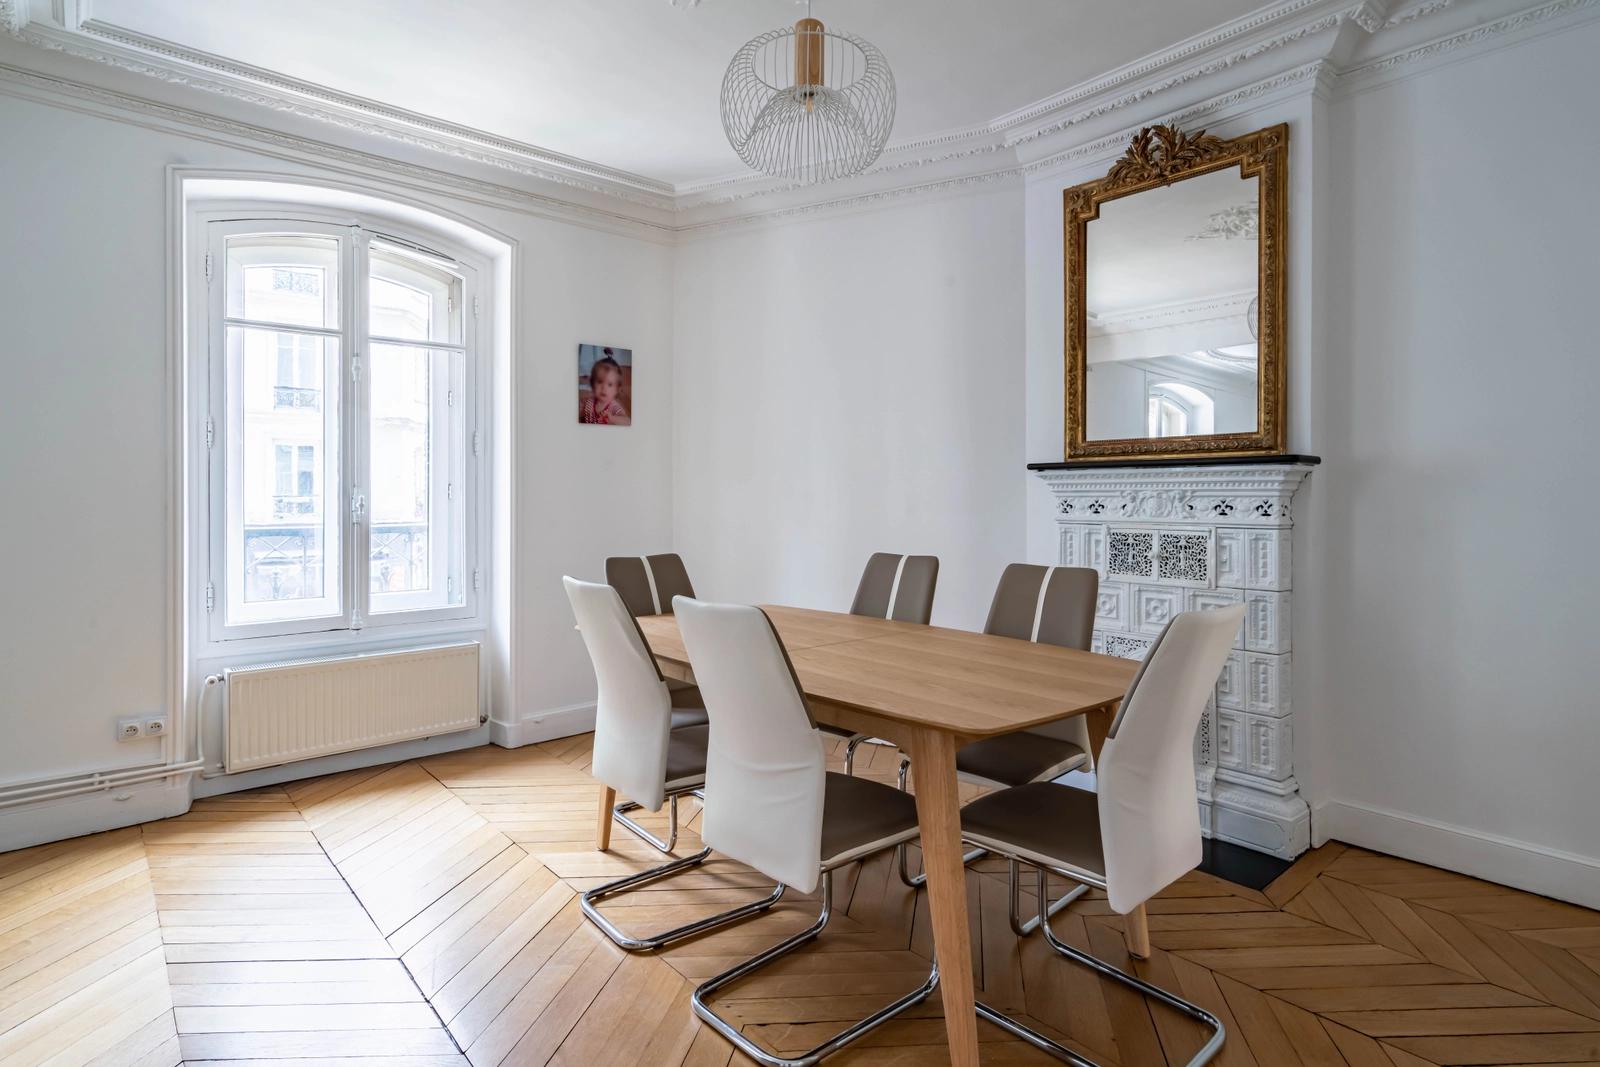 Meeting room in Beautiful Haussmann apartment - Paris 17th district - 0